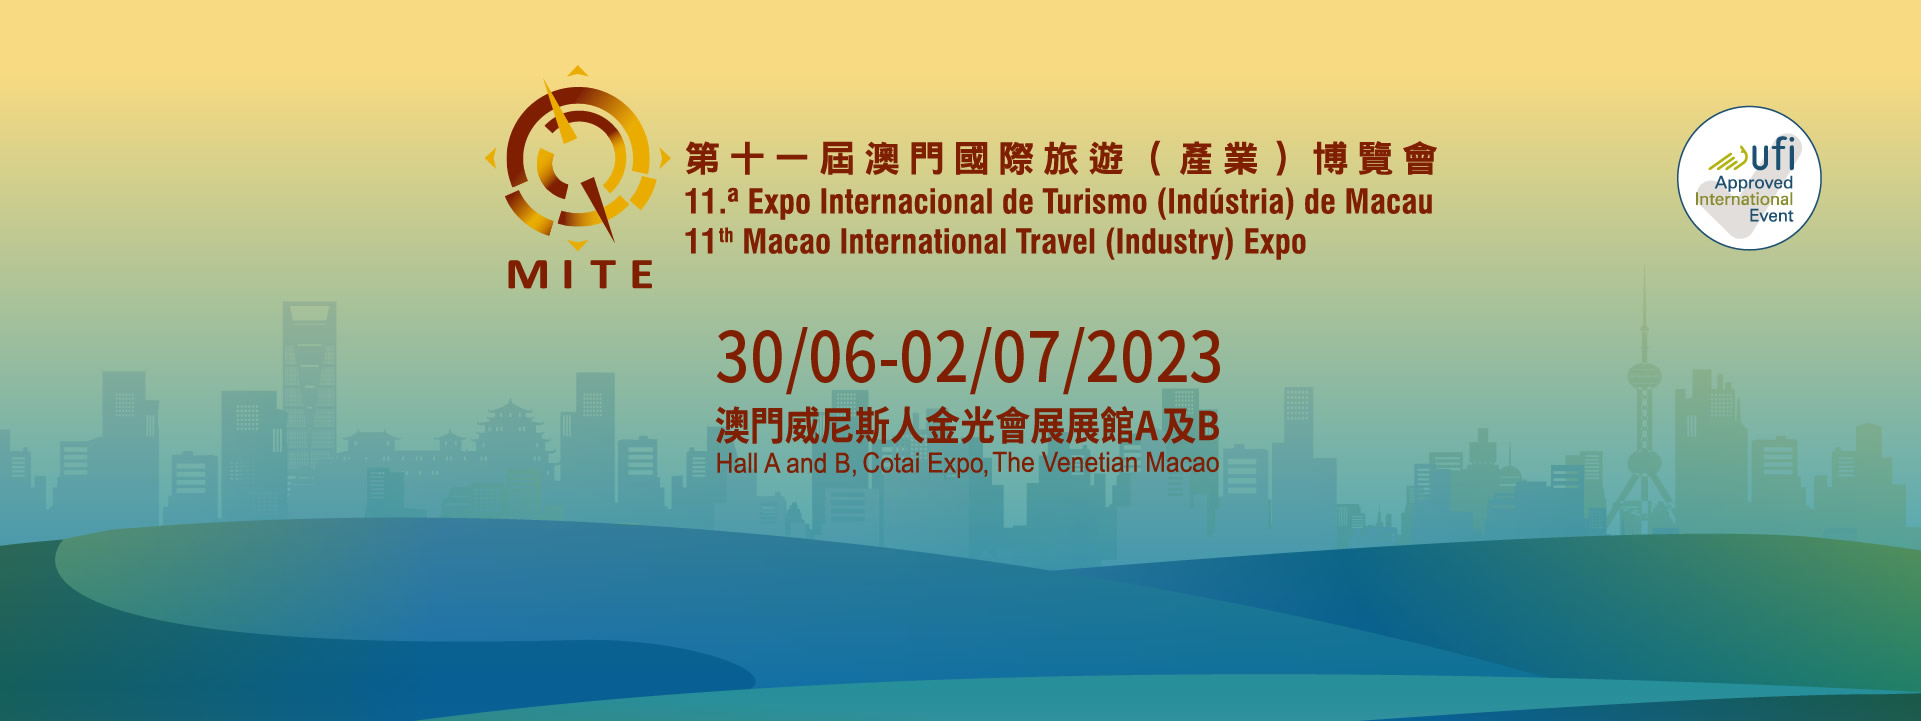 international travel expo 2023